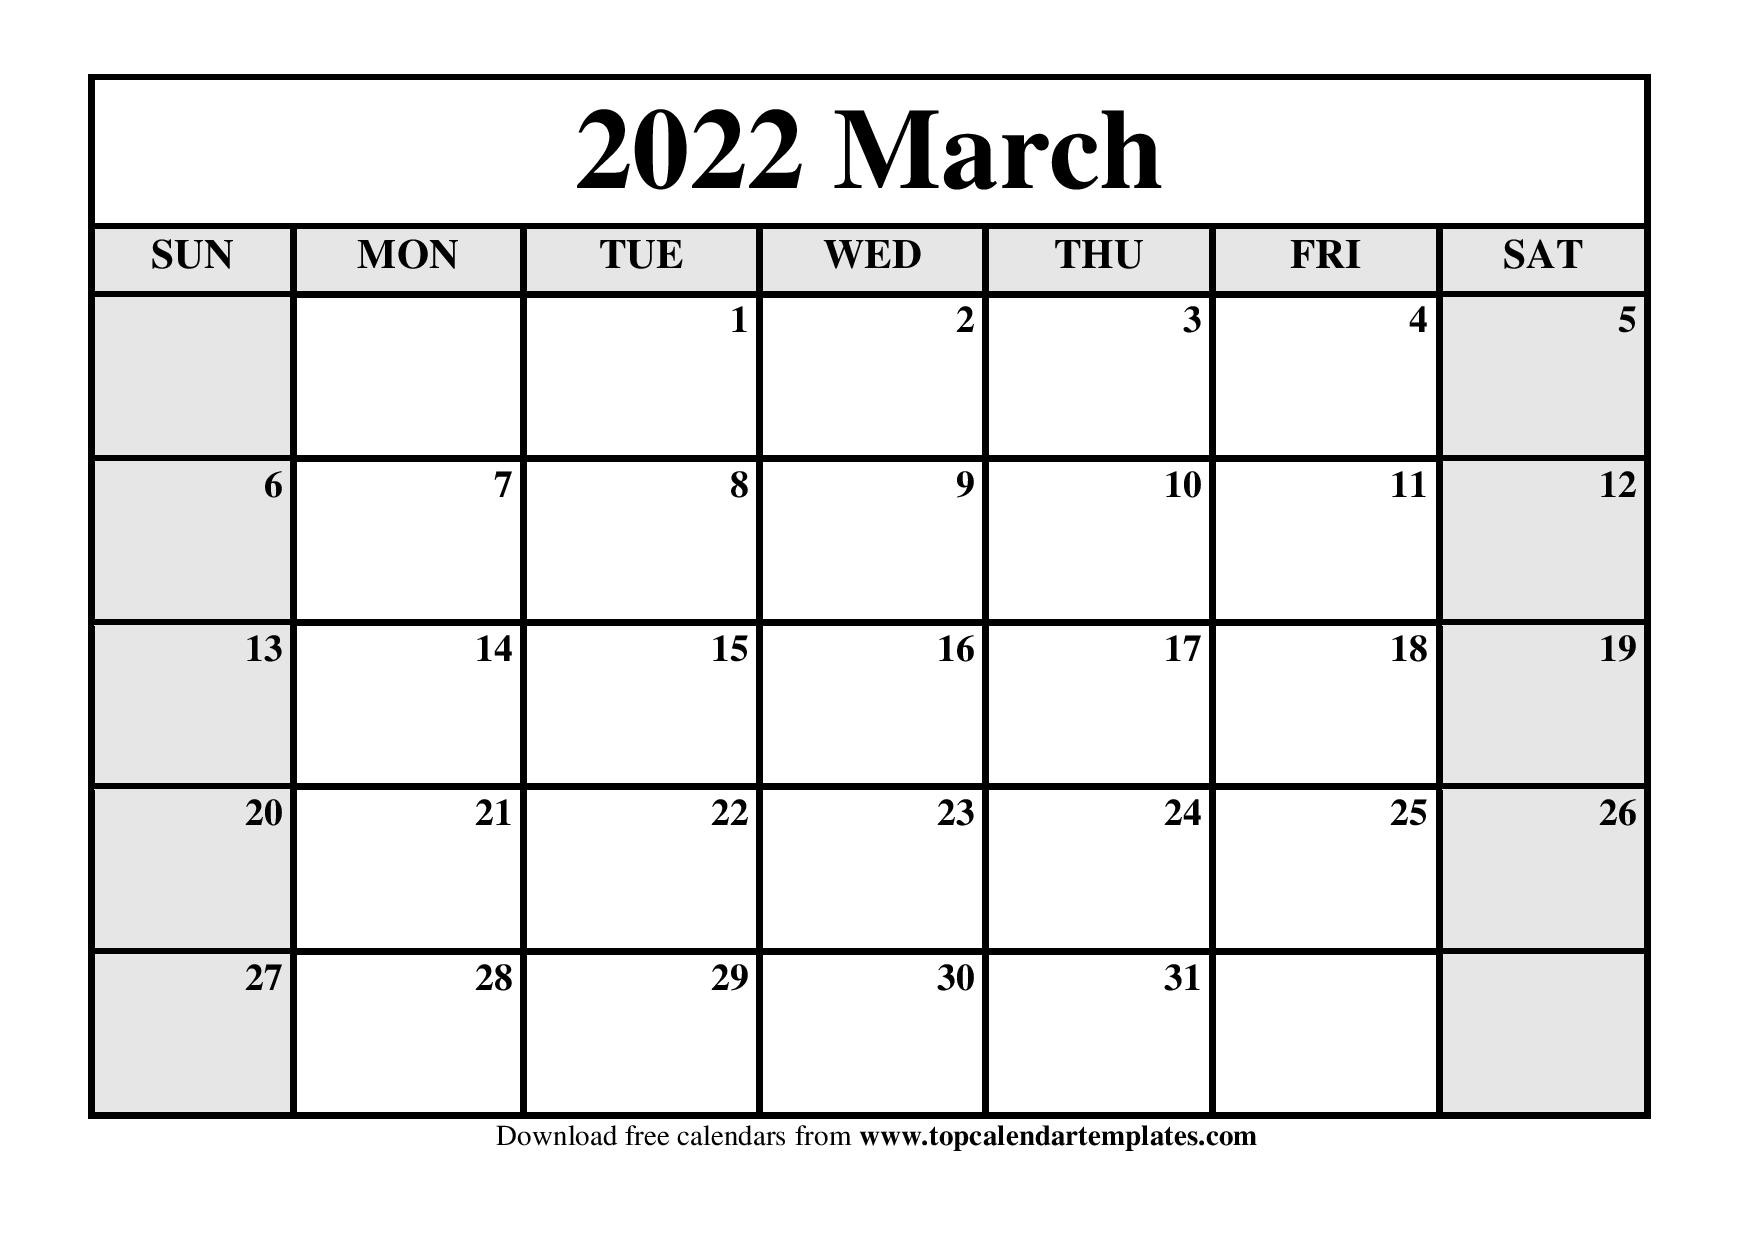 Printable Calendar March 2022 Templates - Pdf, Word, Excel  Blank Calendar April 2022 To March 2022